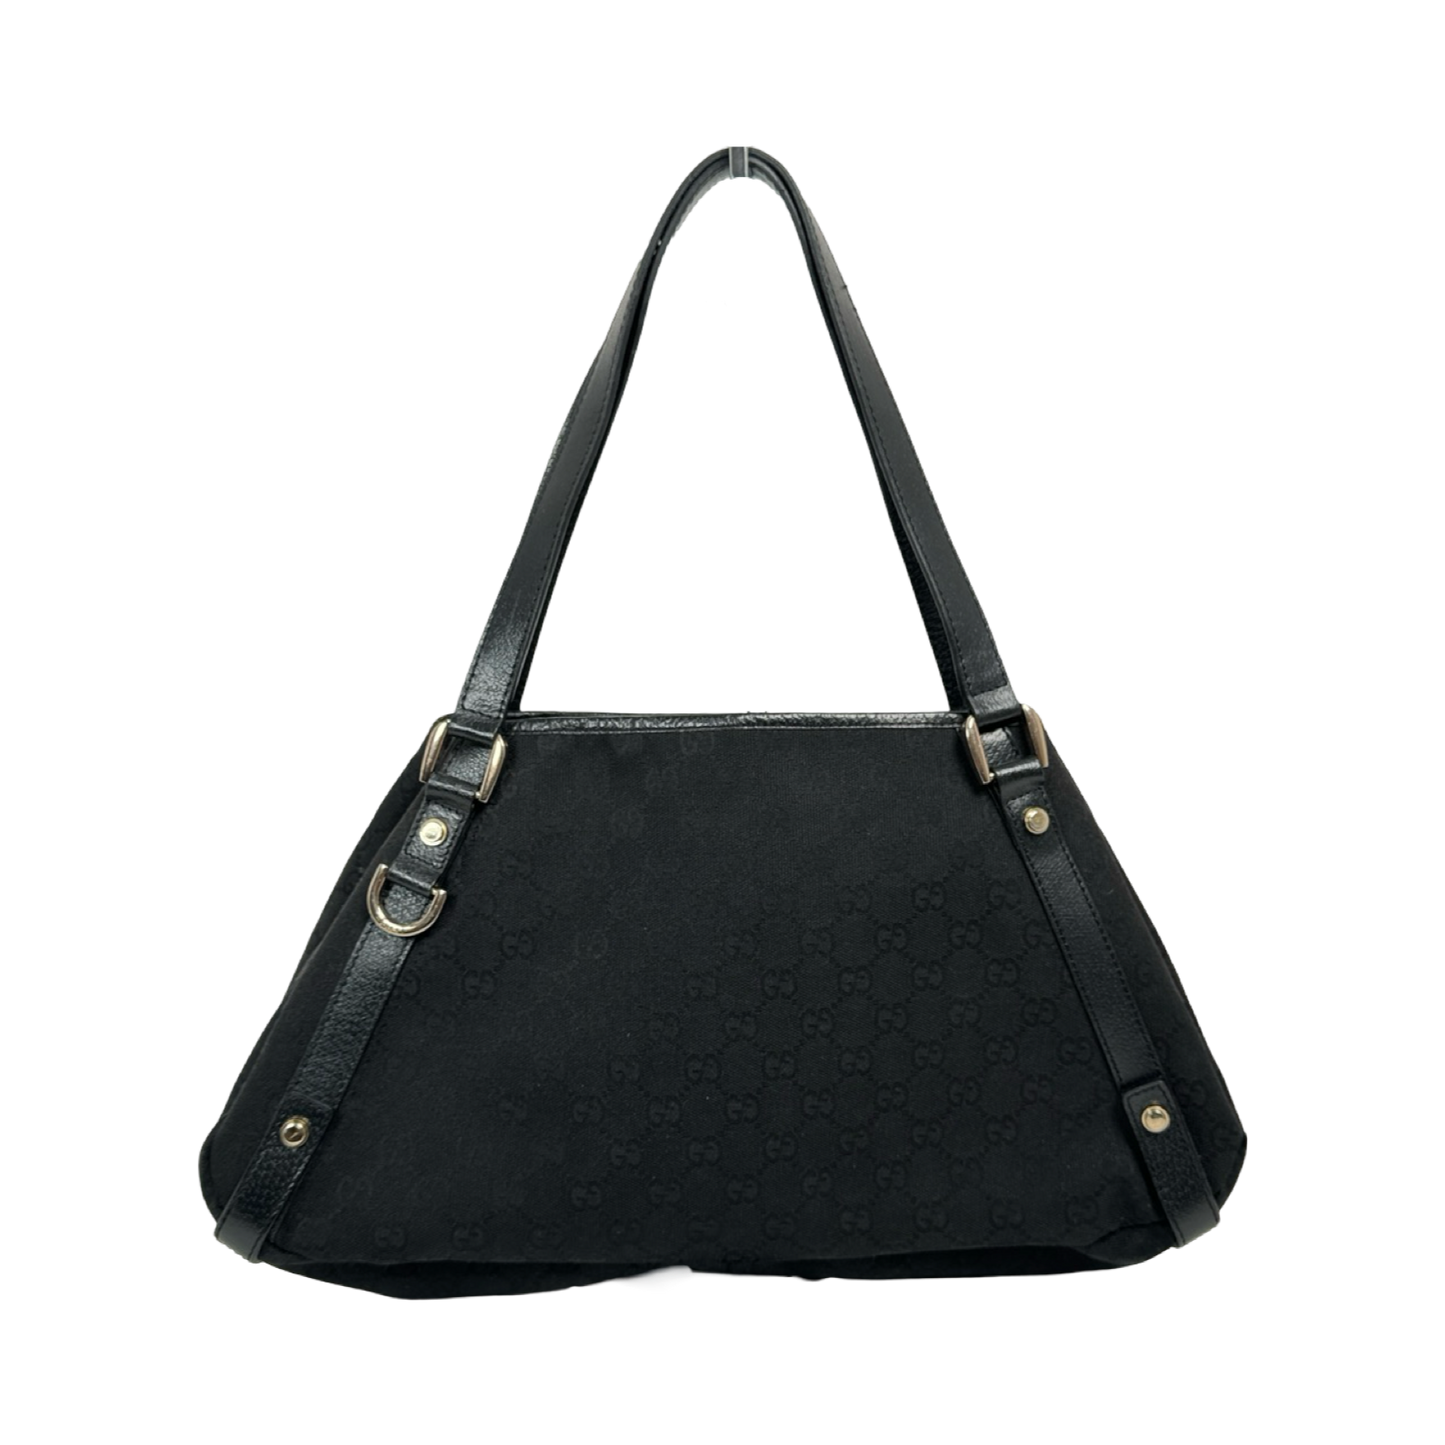 Gucci GG Canvas Abbey Handbag